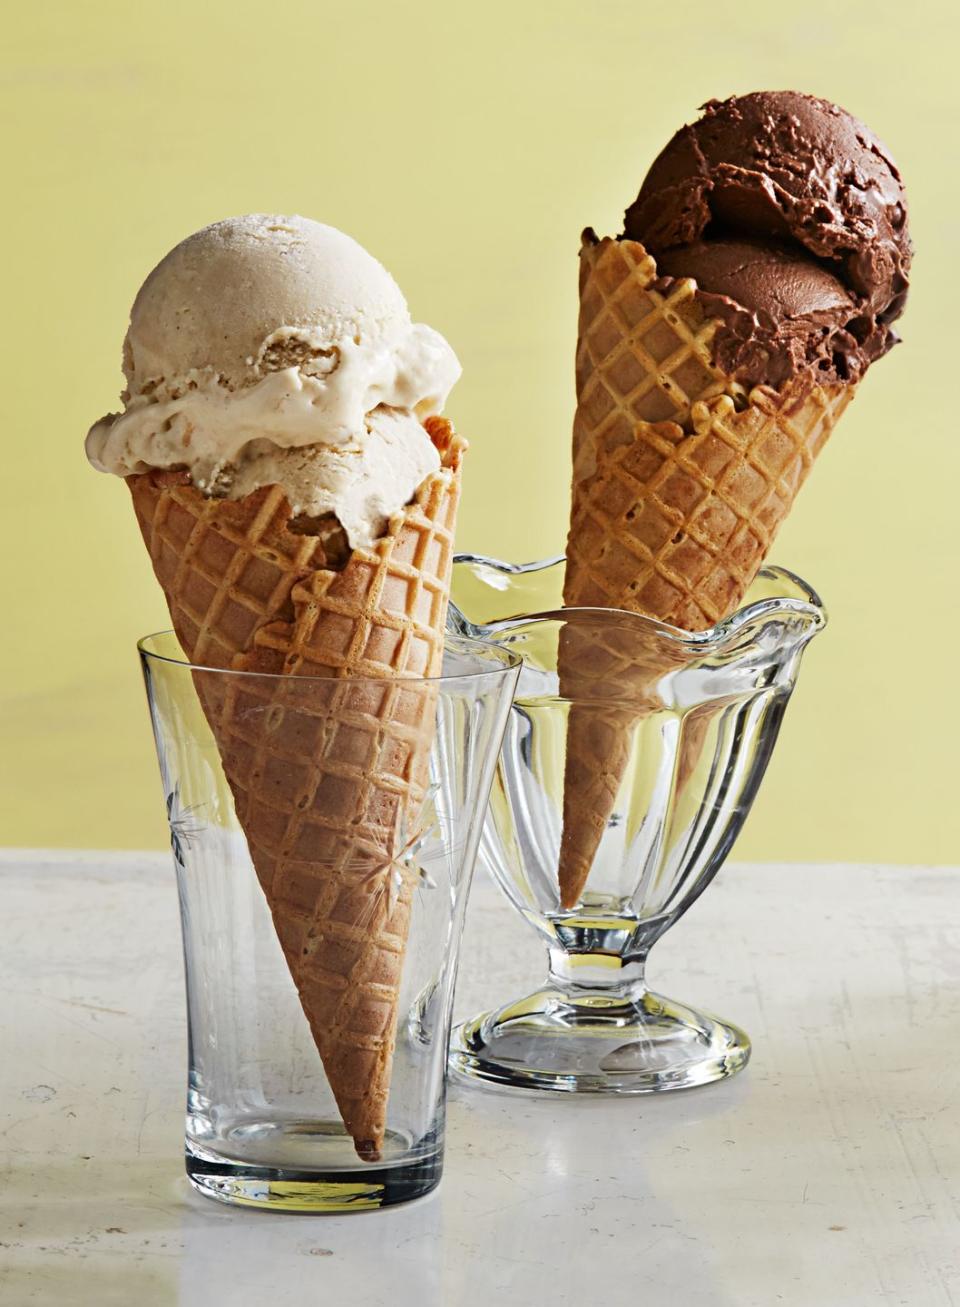 indulgent gelato in waffle cones sitting in glass cups